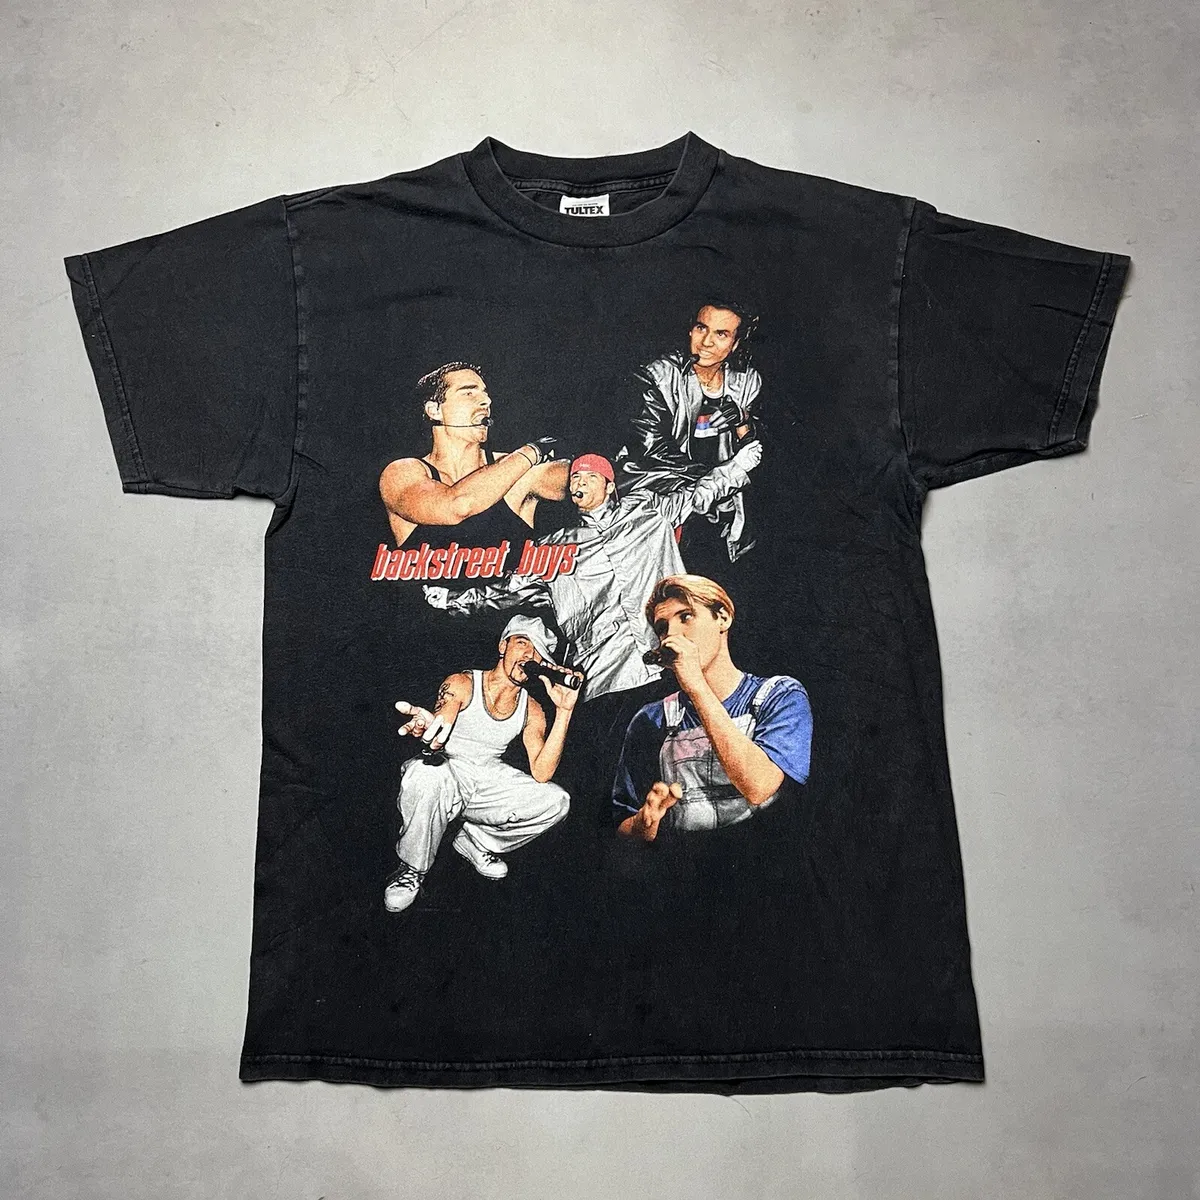 Vintage Backstreet Boys 98 Tour Boy Band T Shirt Large | eBay